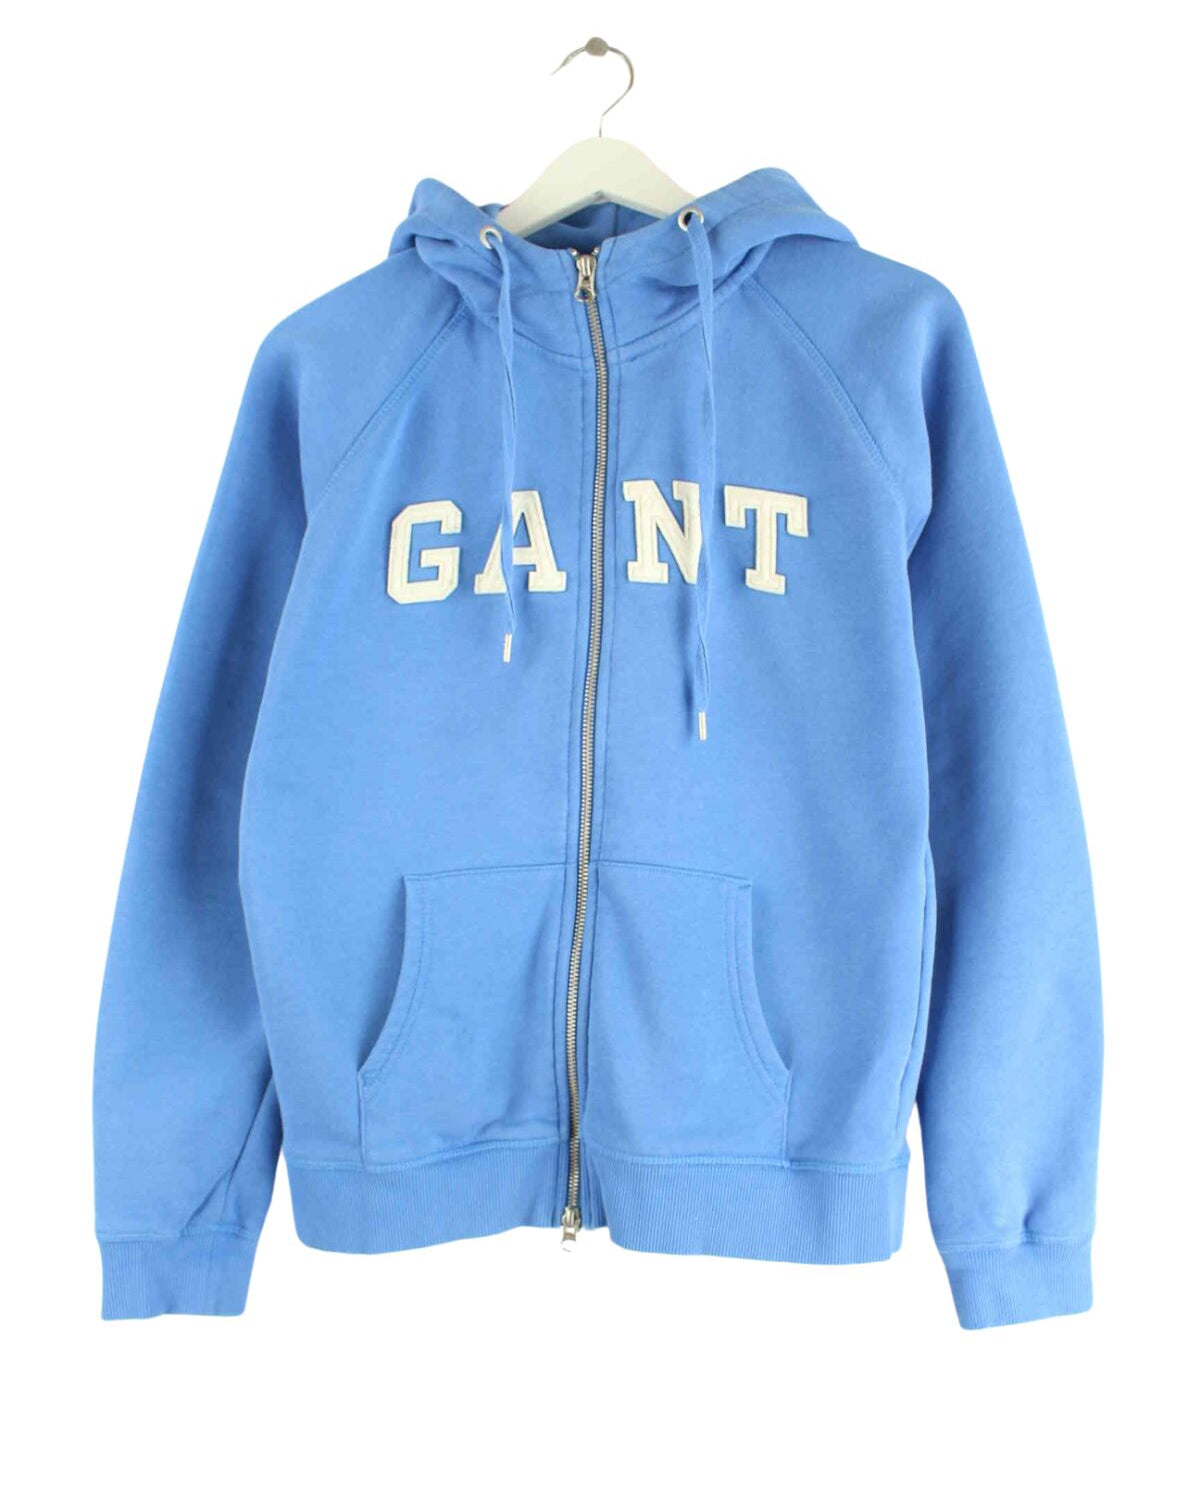 Gant Embroidered Zip Hoodie Blau M (front image)